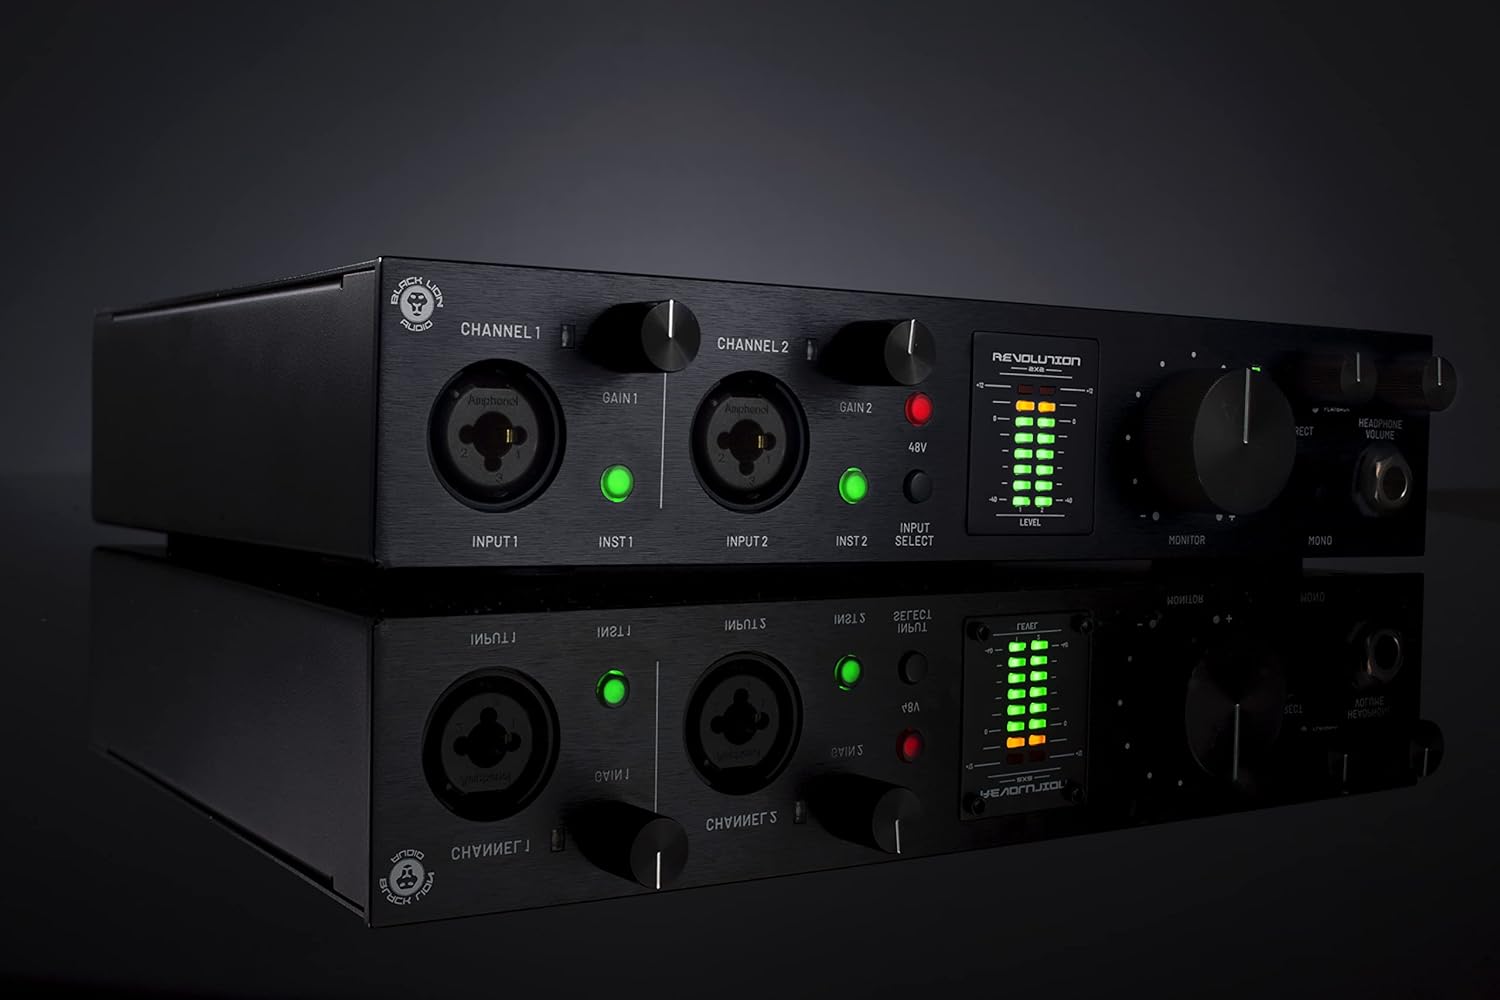 Black Lion Audio Revolution 2x2 USB Audio Recording Interface